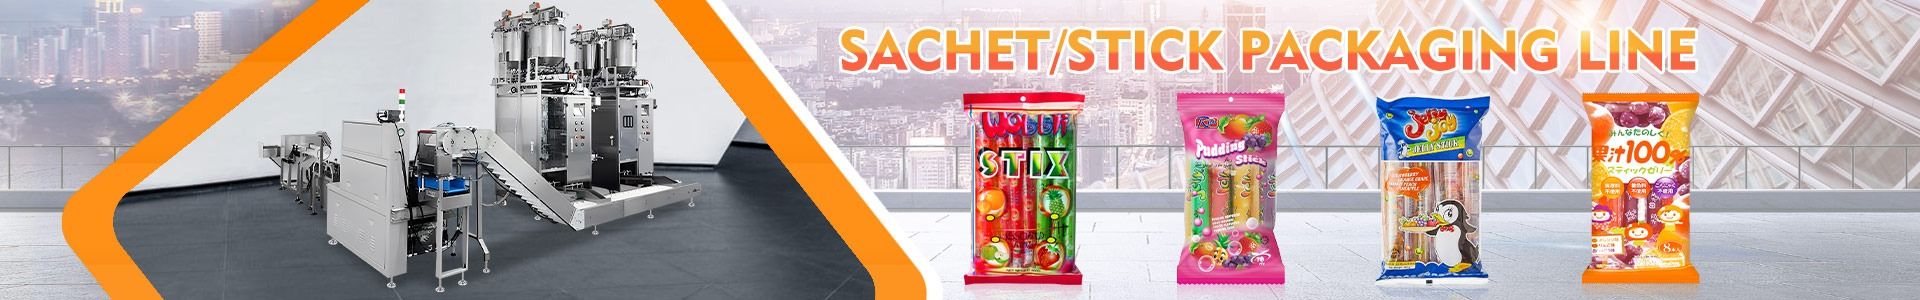 Sachet/Stick Packaging Line